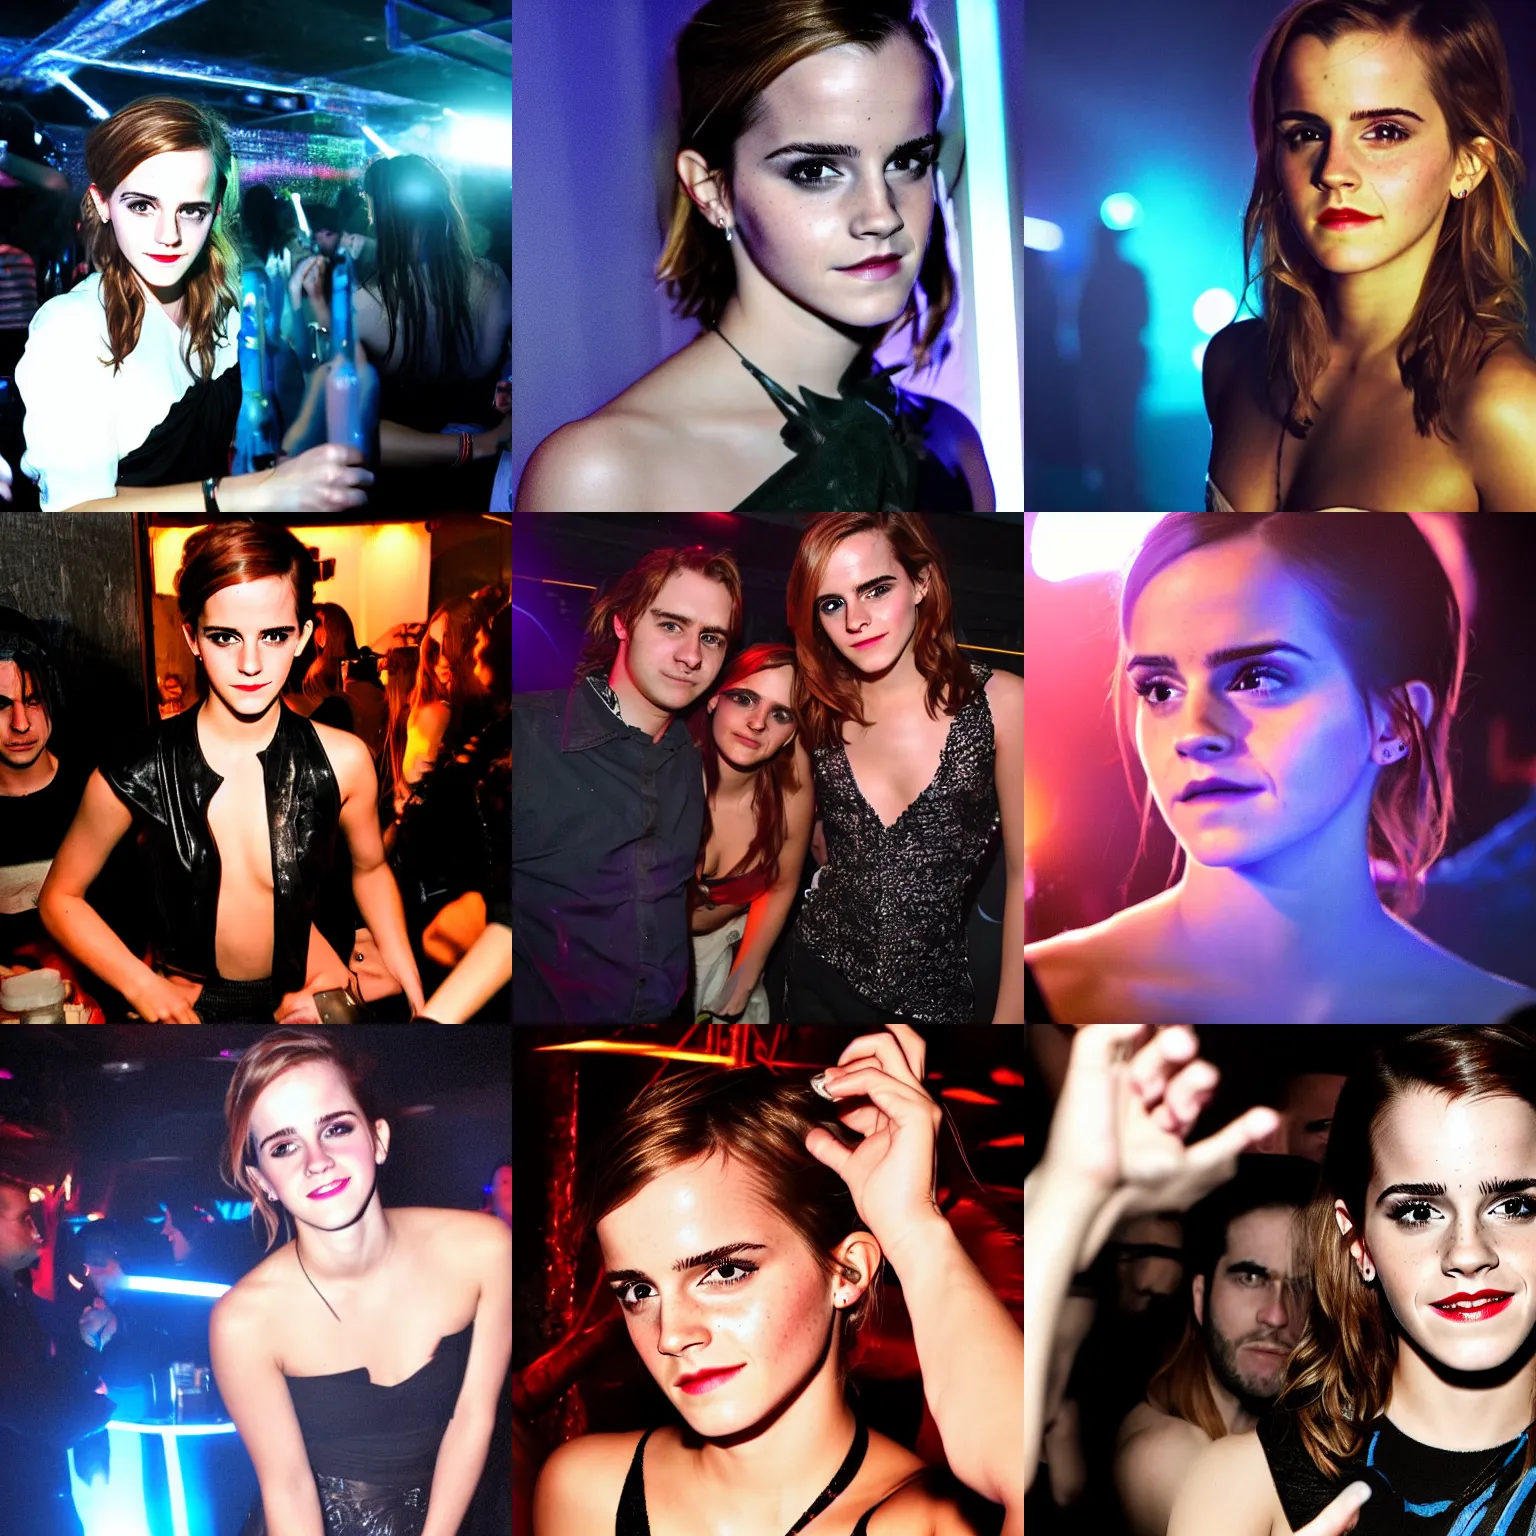 Prompt: A photo of Emma Watson partying in the nightclub. Cyberpunk lighting.